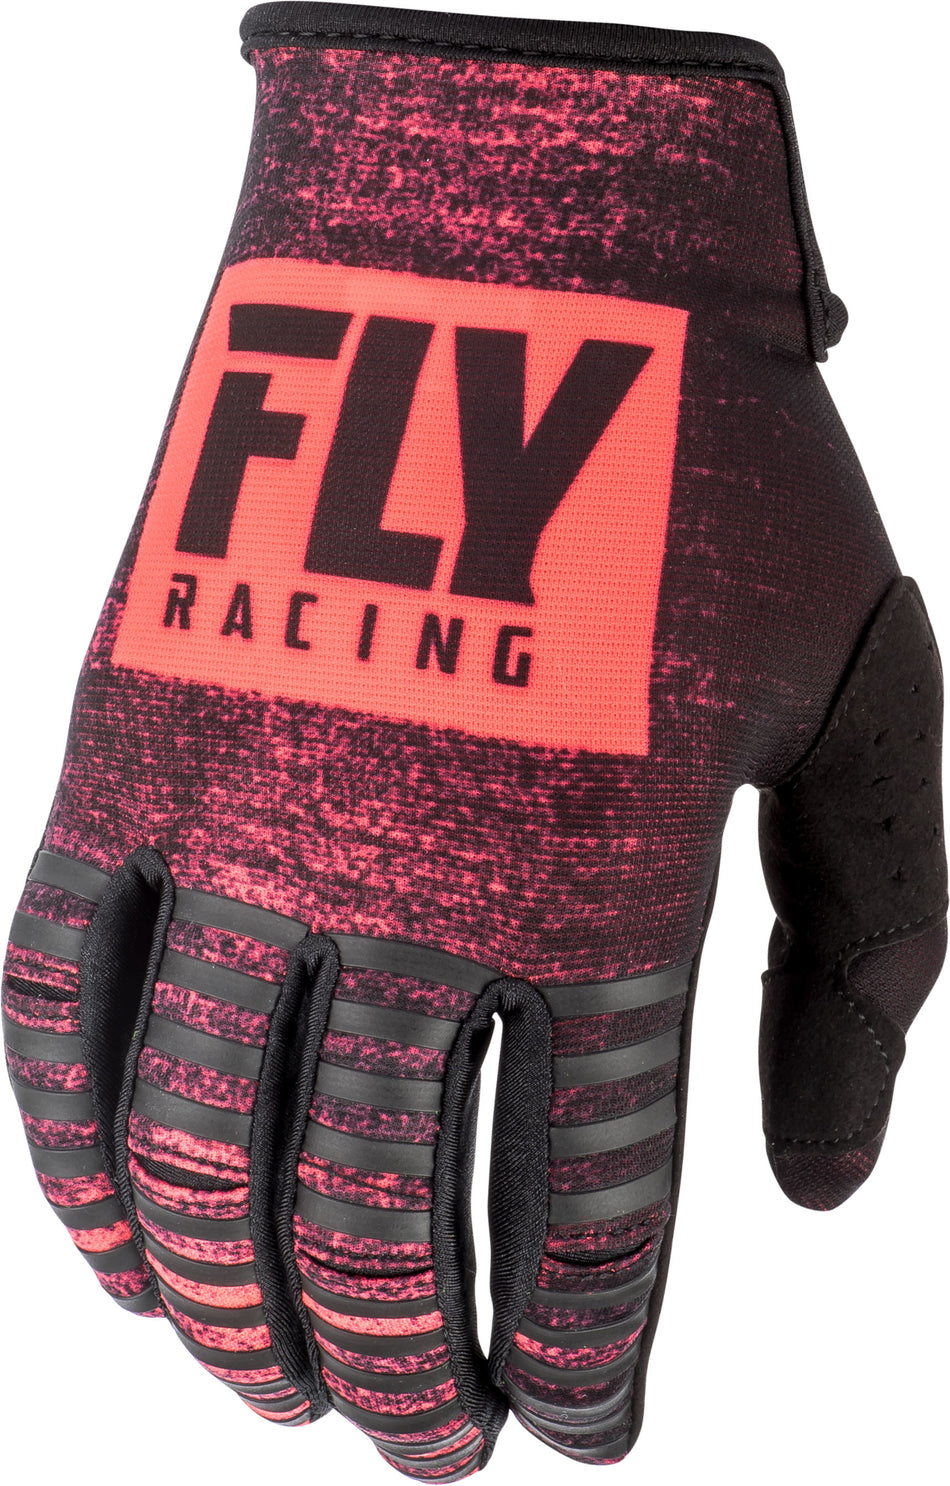 FLY RACING Kinetic Noiz Gloves Neon Red/Black Sz 11 372-51211